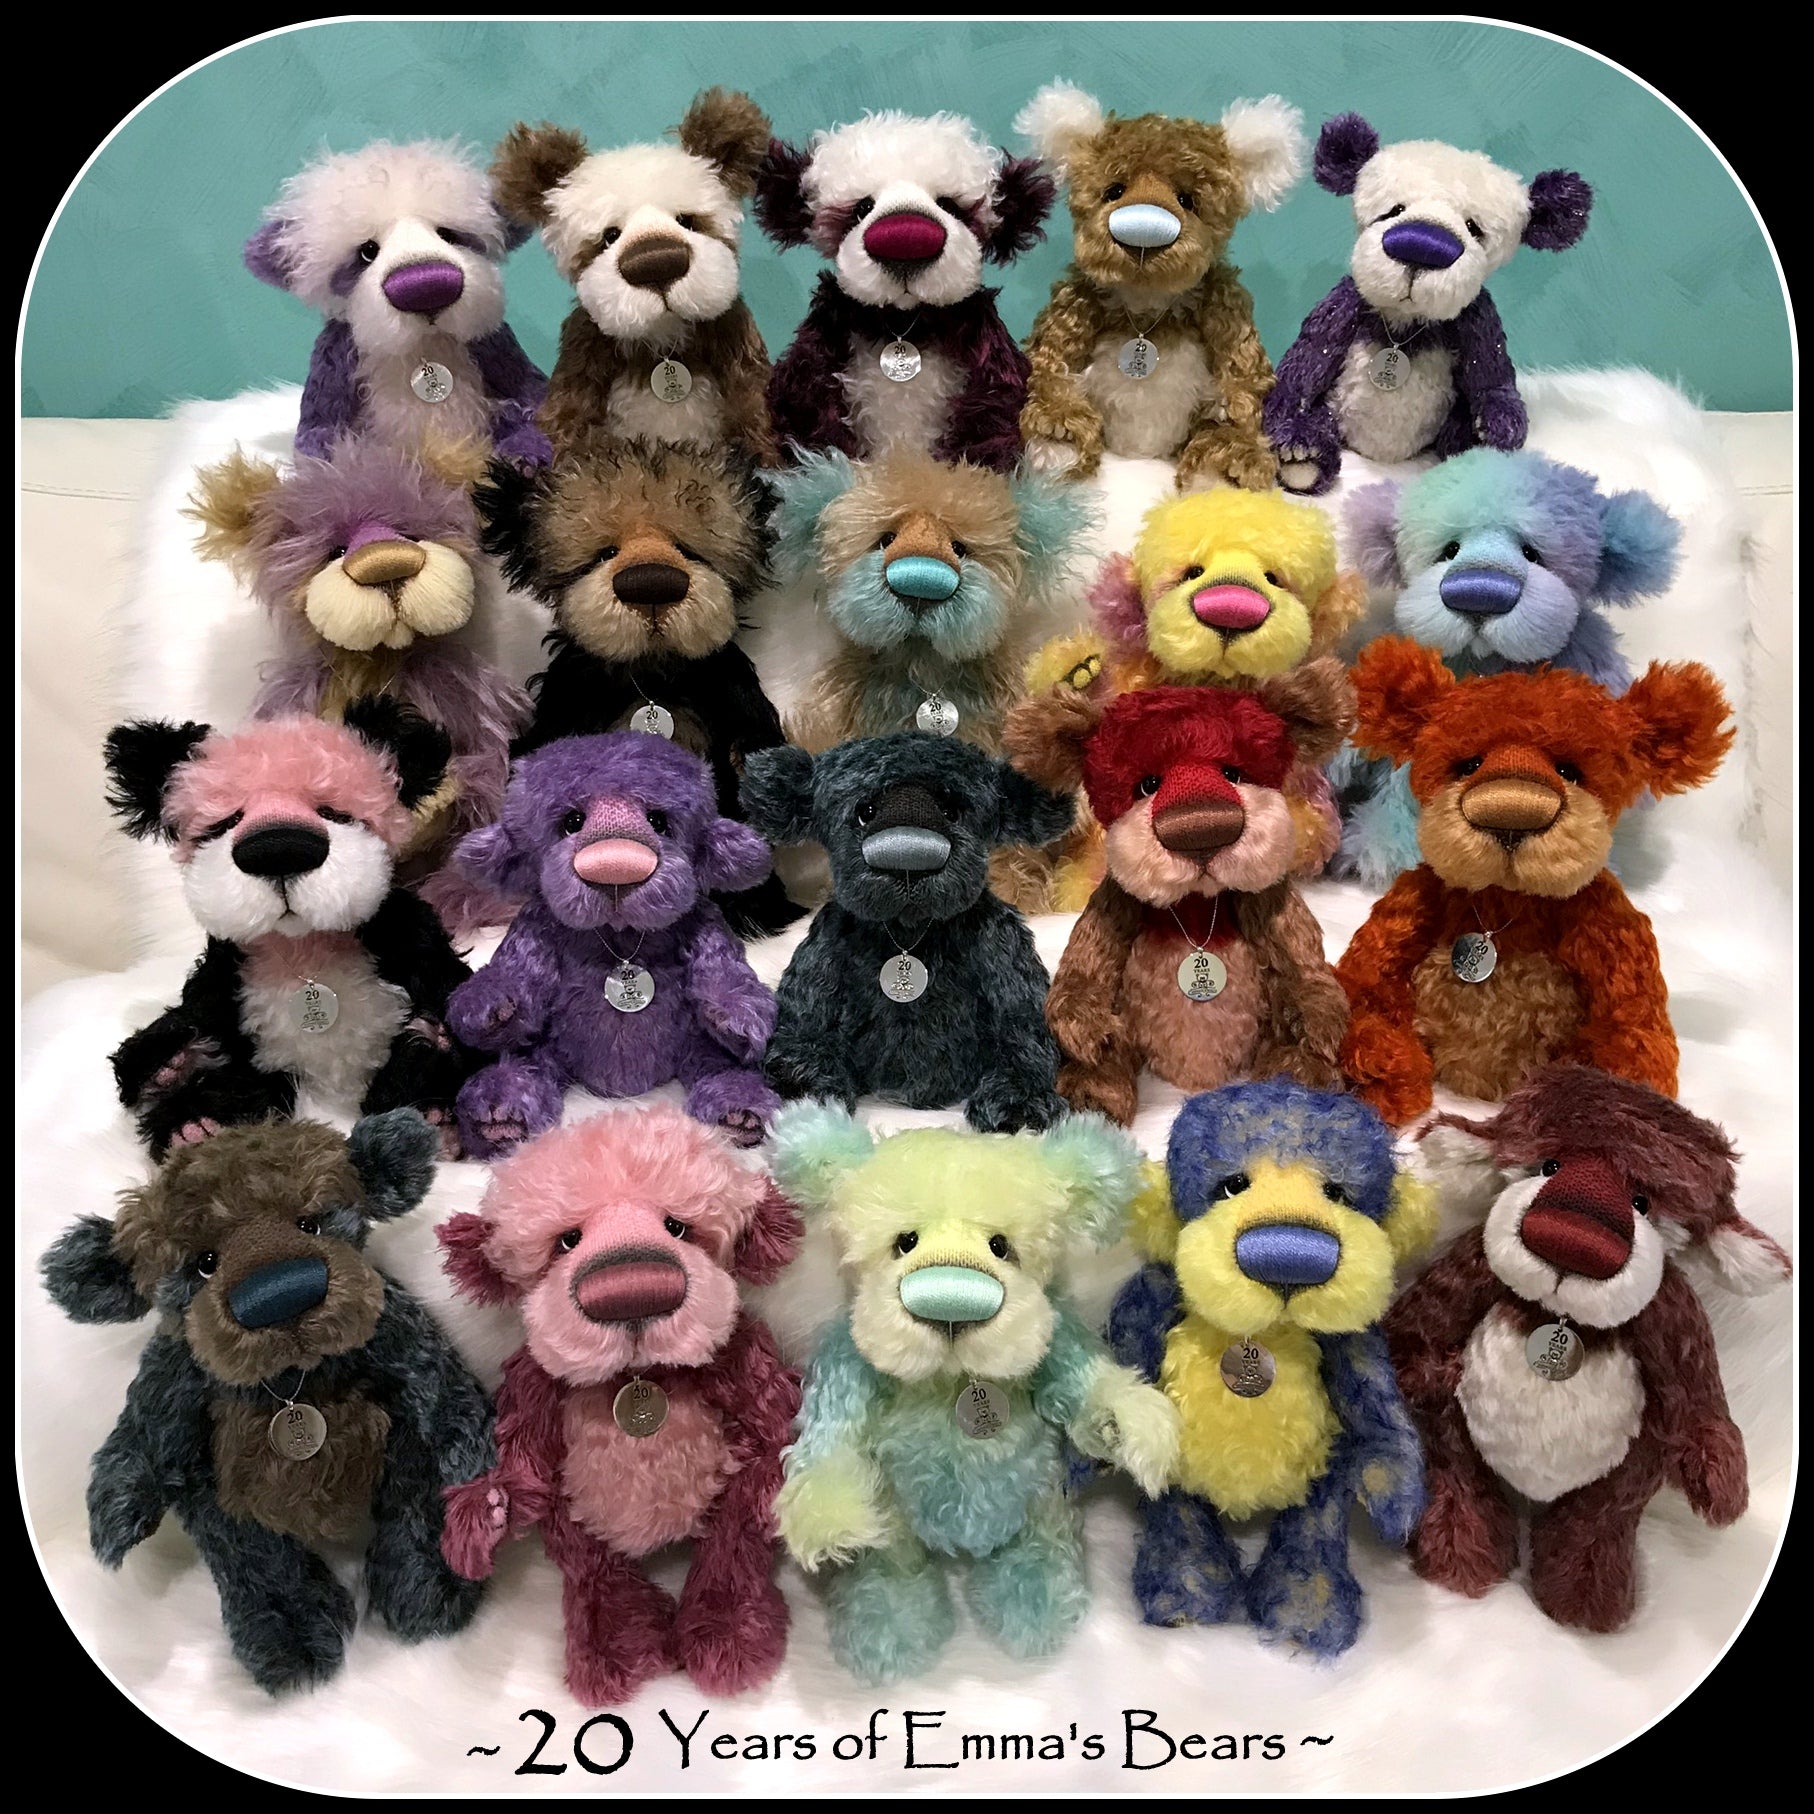 Rebel - 20 Years of Emma's Bears Commemorative Teddy - OOAK in a series